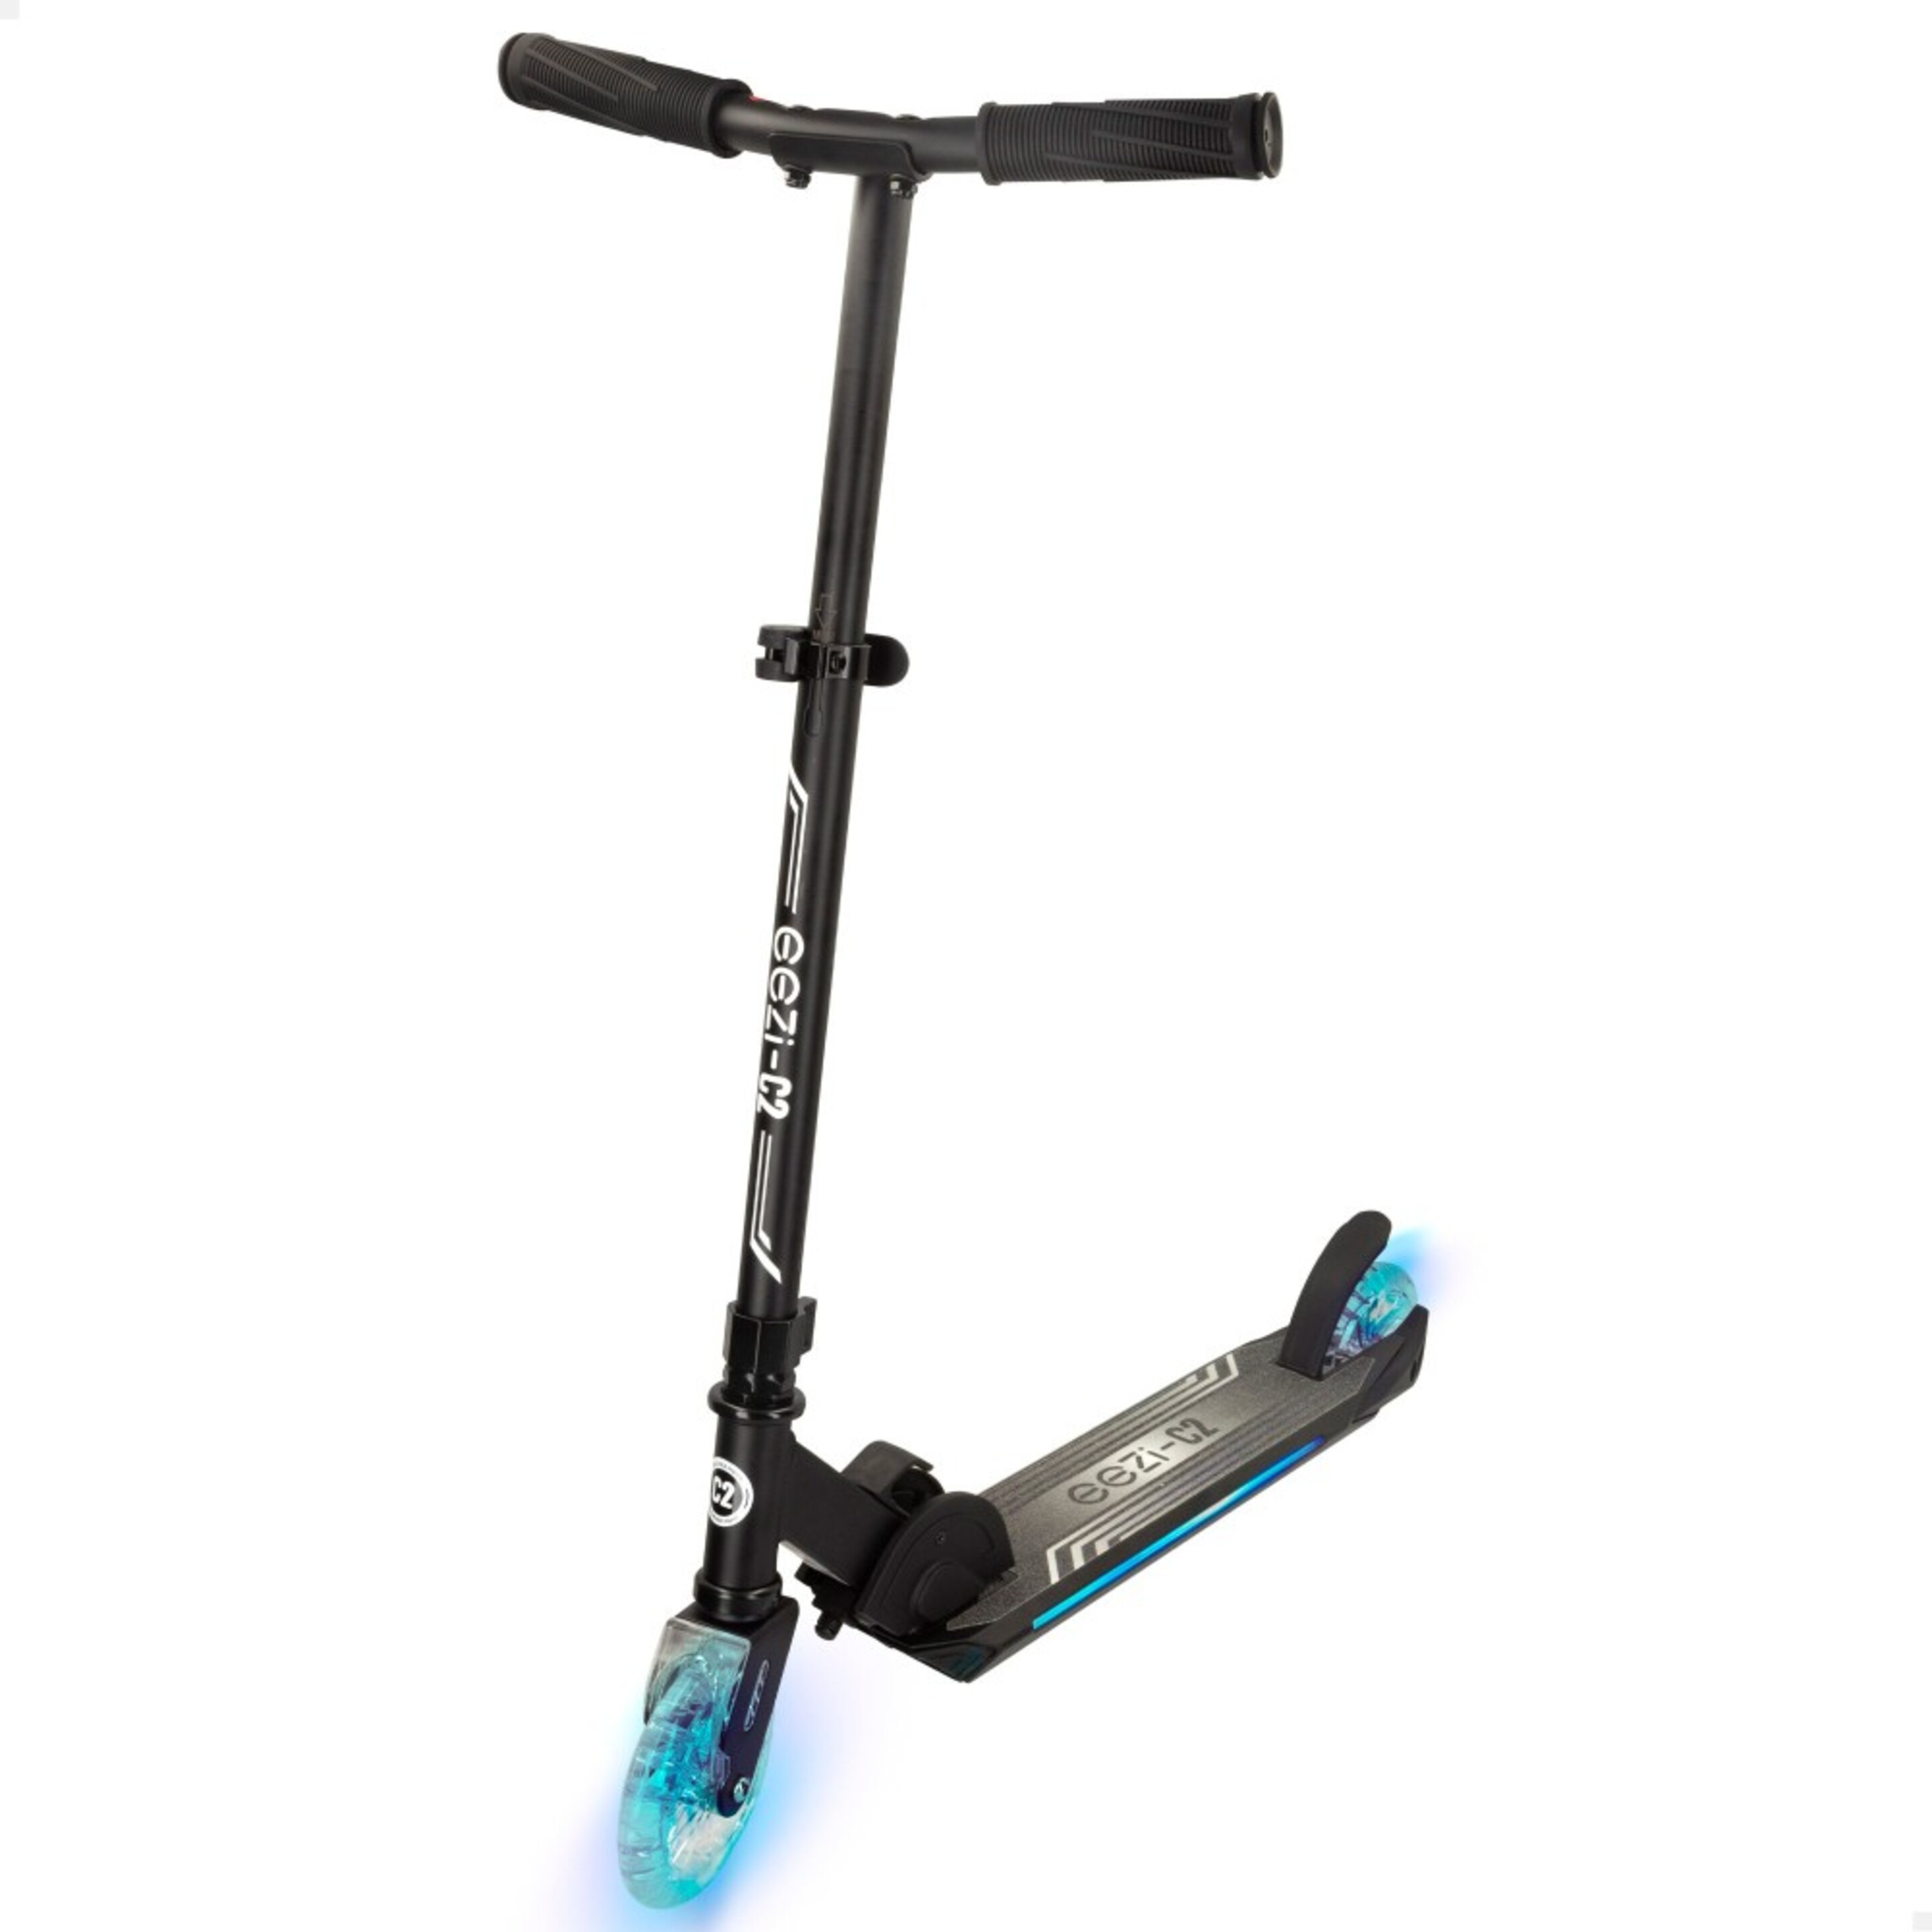 Scooter De 2 Rodas Preto Dobrável C/luzes Personalizáveis Eezi - Preto/Azul | Sport Zone MKP